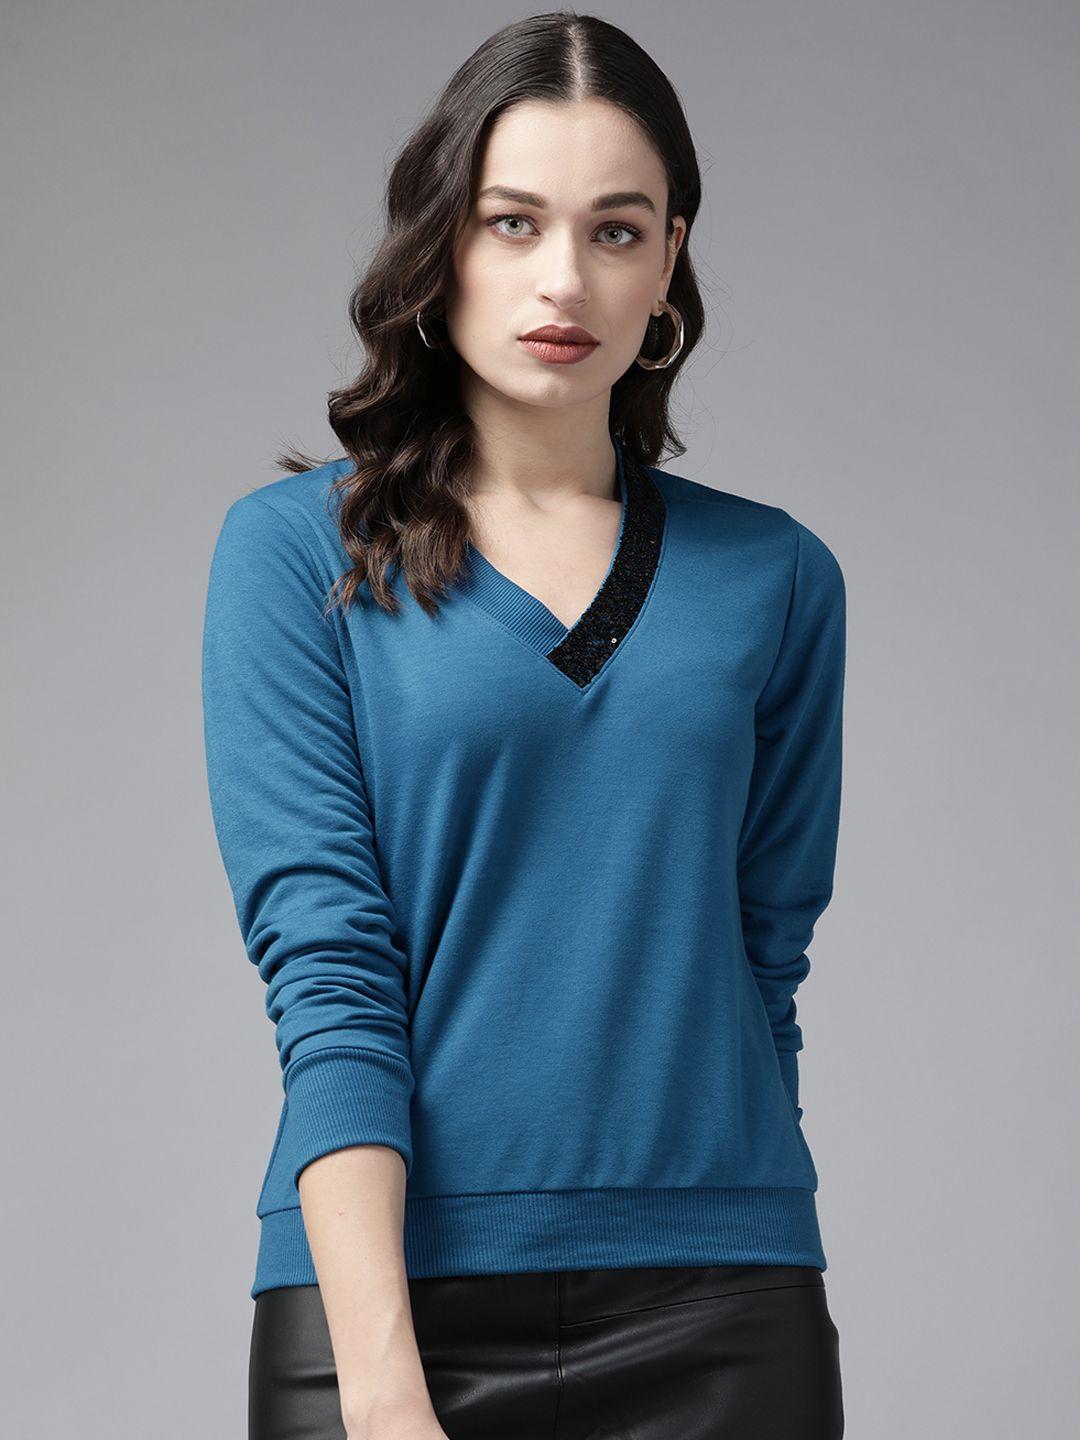 kassually women teal blue solid sweatshirt